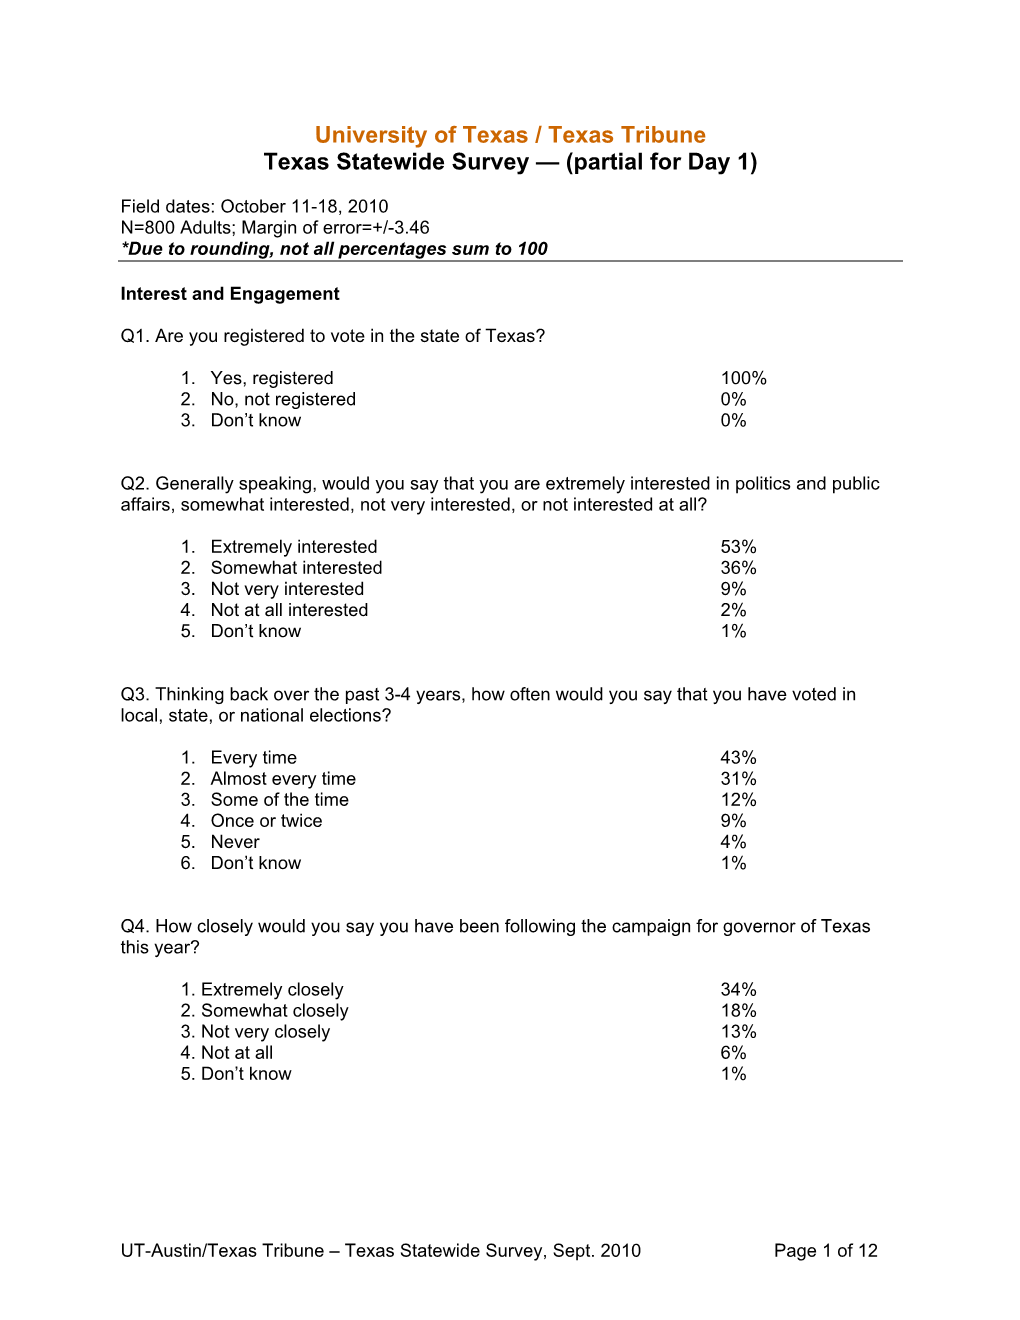 University of Texas / Texas Tribune Texas Statewide Survey — (Partial for Day 1)